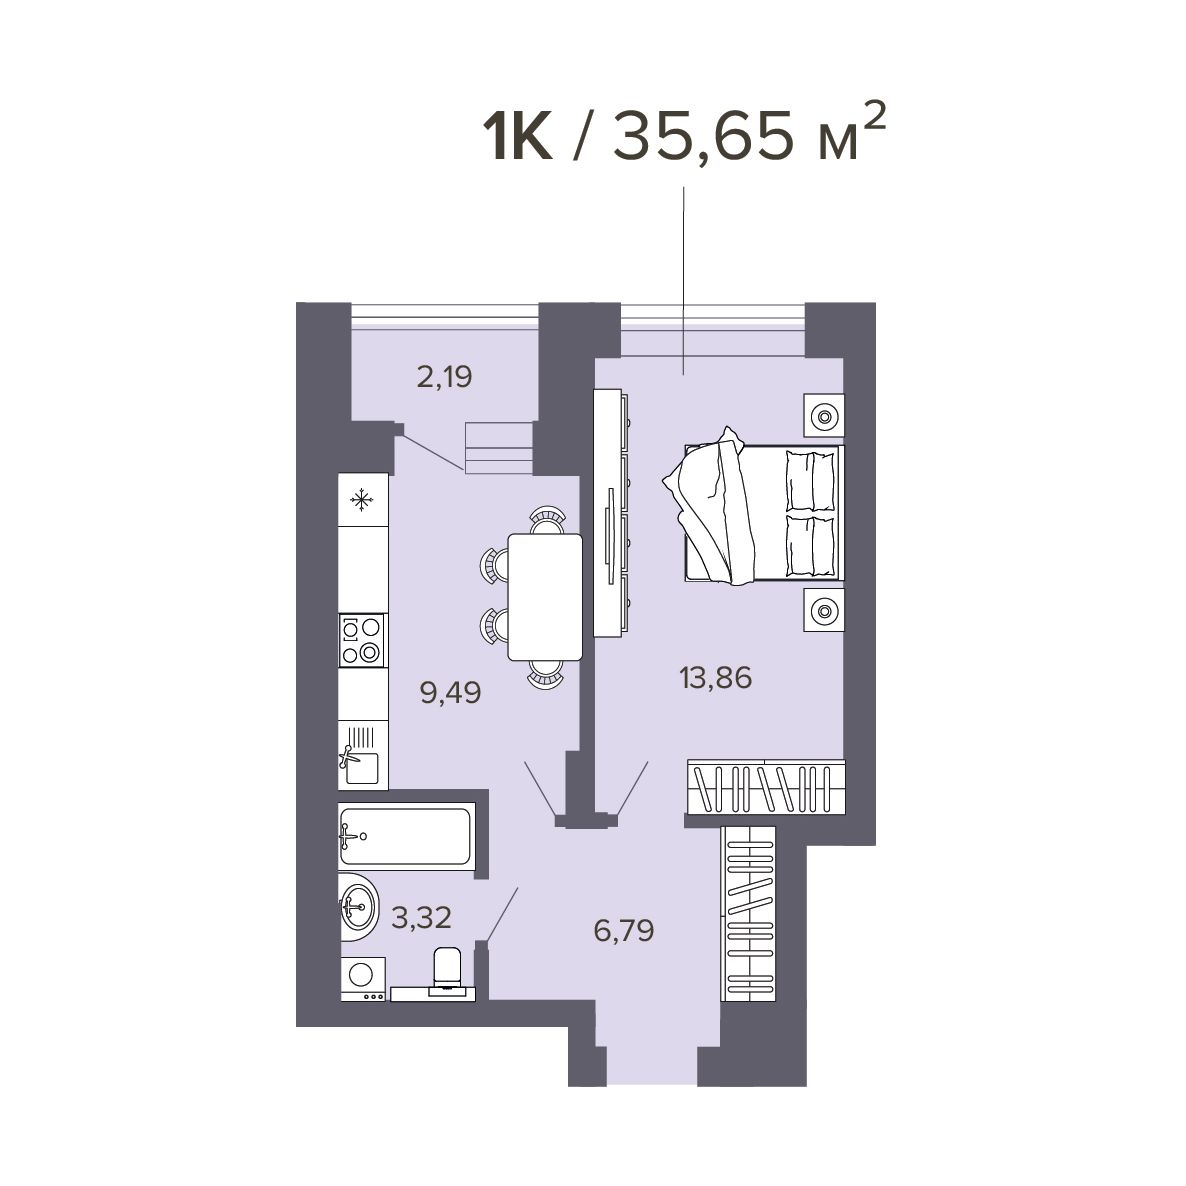 1-комнатная квартира 35.65м2 ЖК Прованс